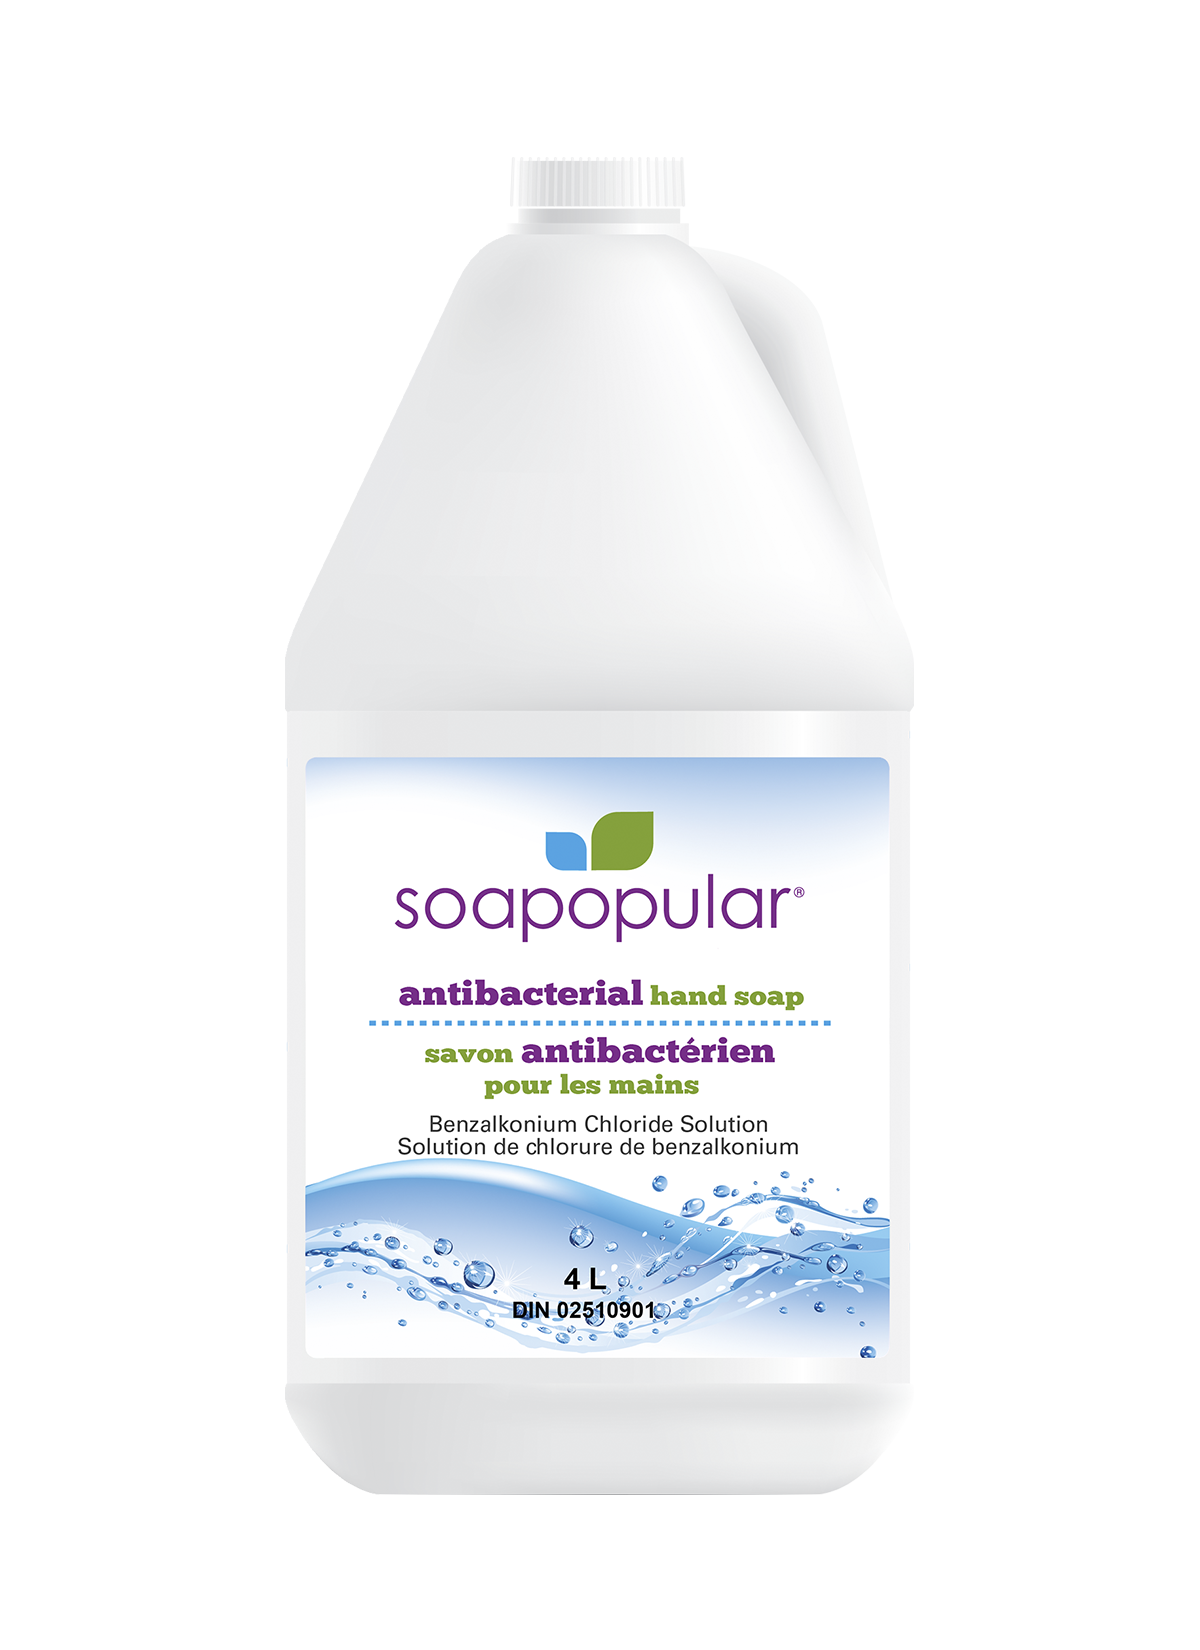 Soapopular triclosan free hand soap foaming formula is a 4L bulk-fill bottle.